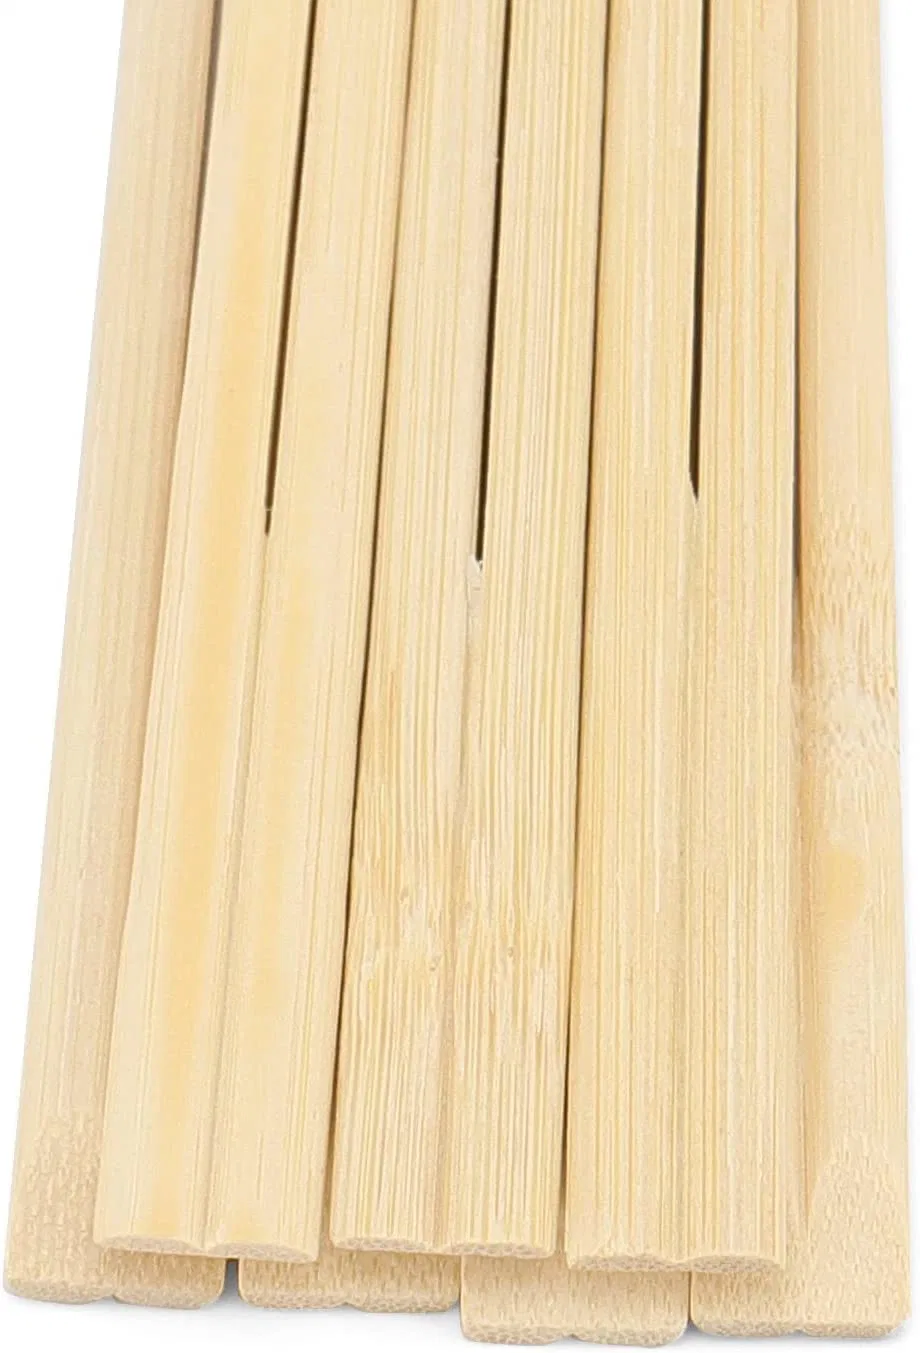 Biodegradable Bamboo Twins Chopsticks Tensoge Twins Chopsticks Hot Sale